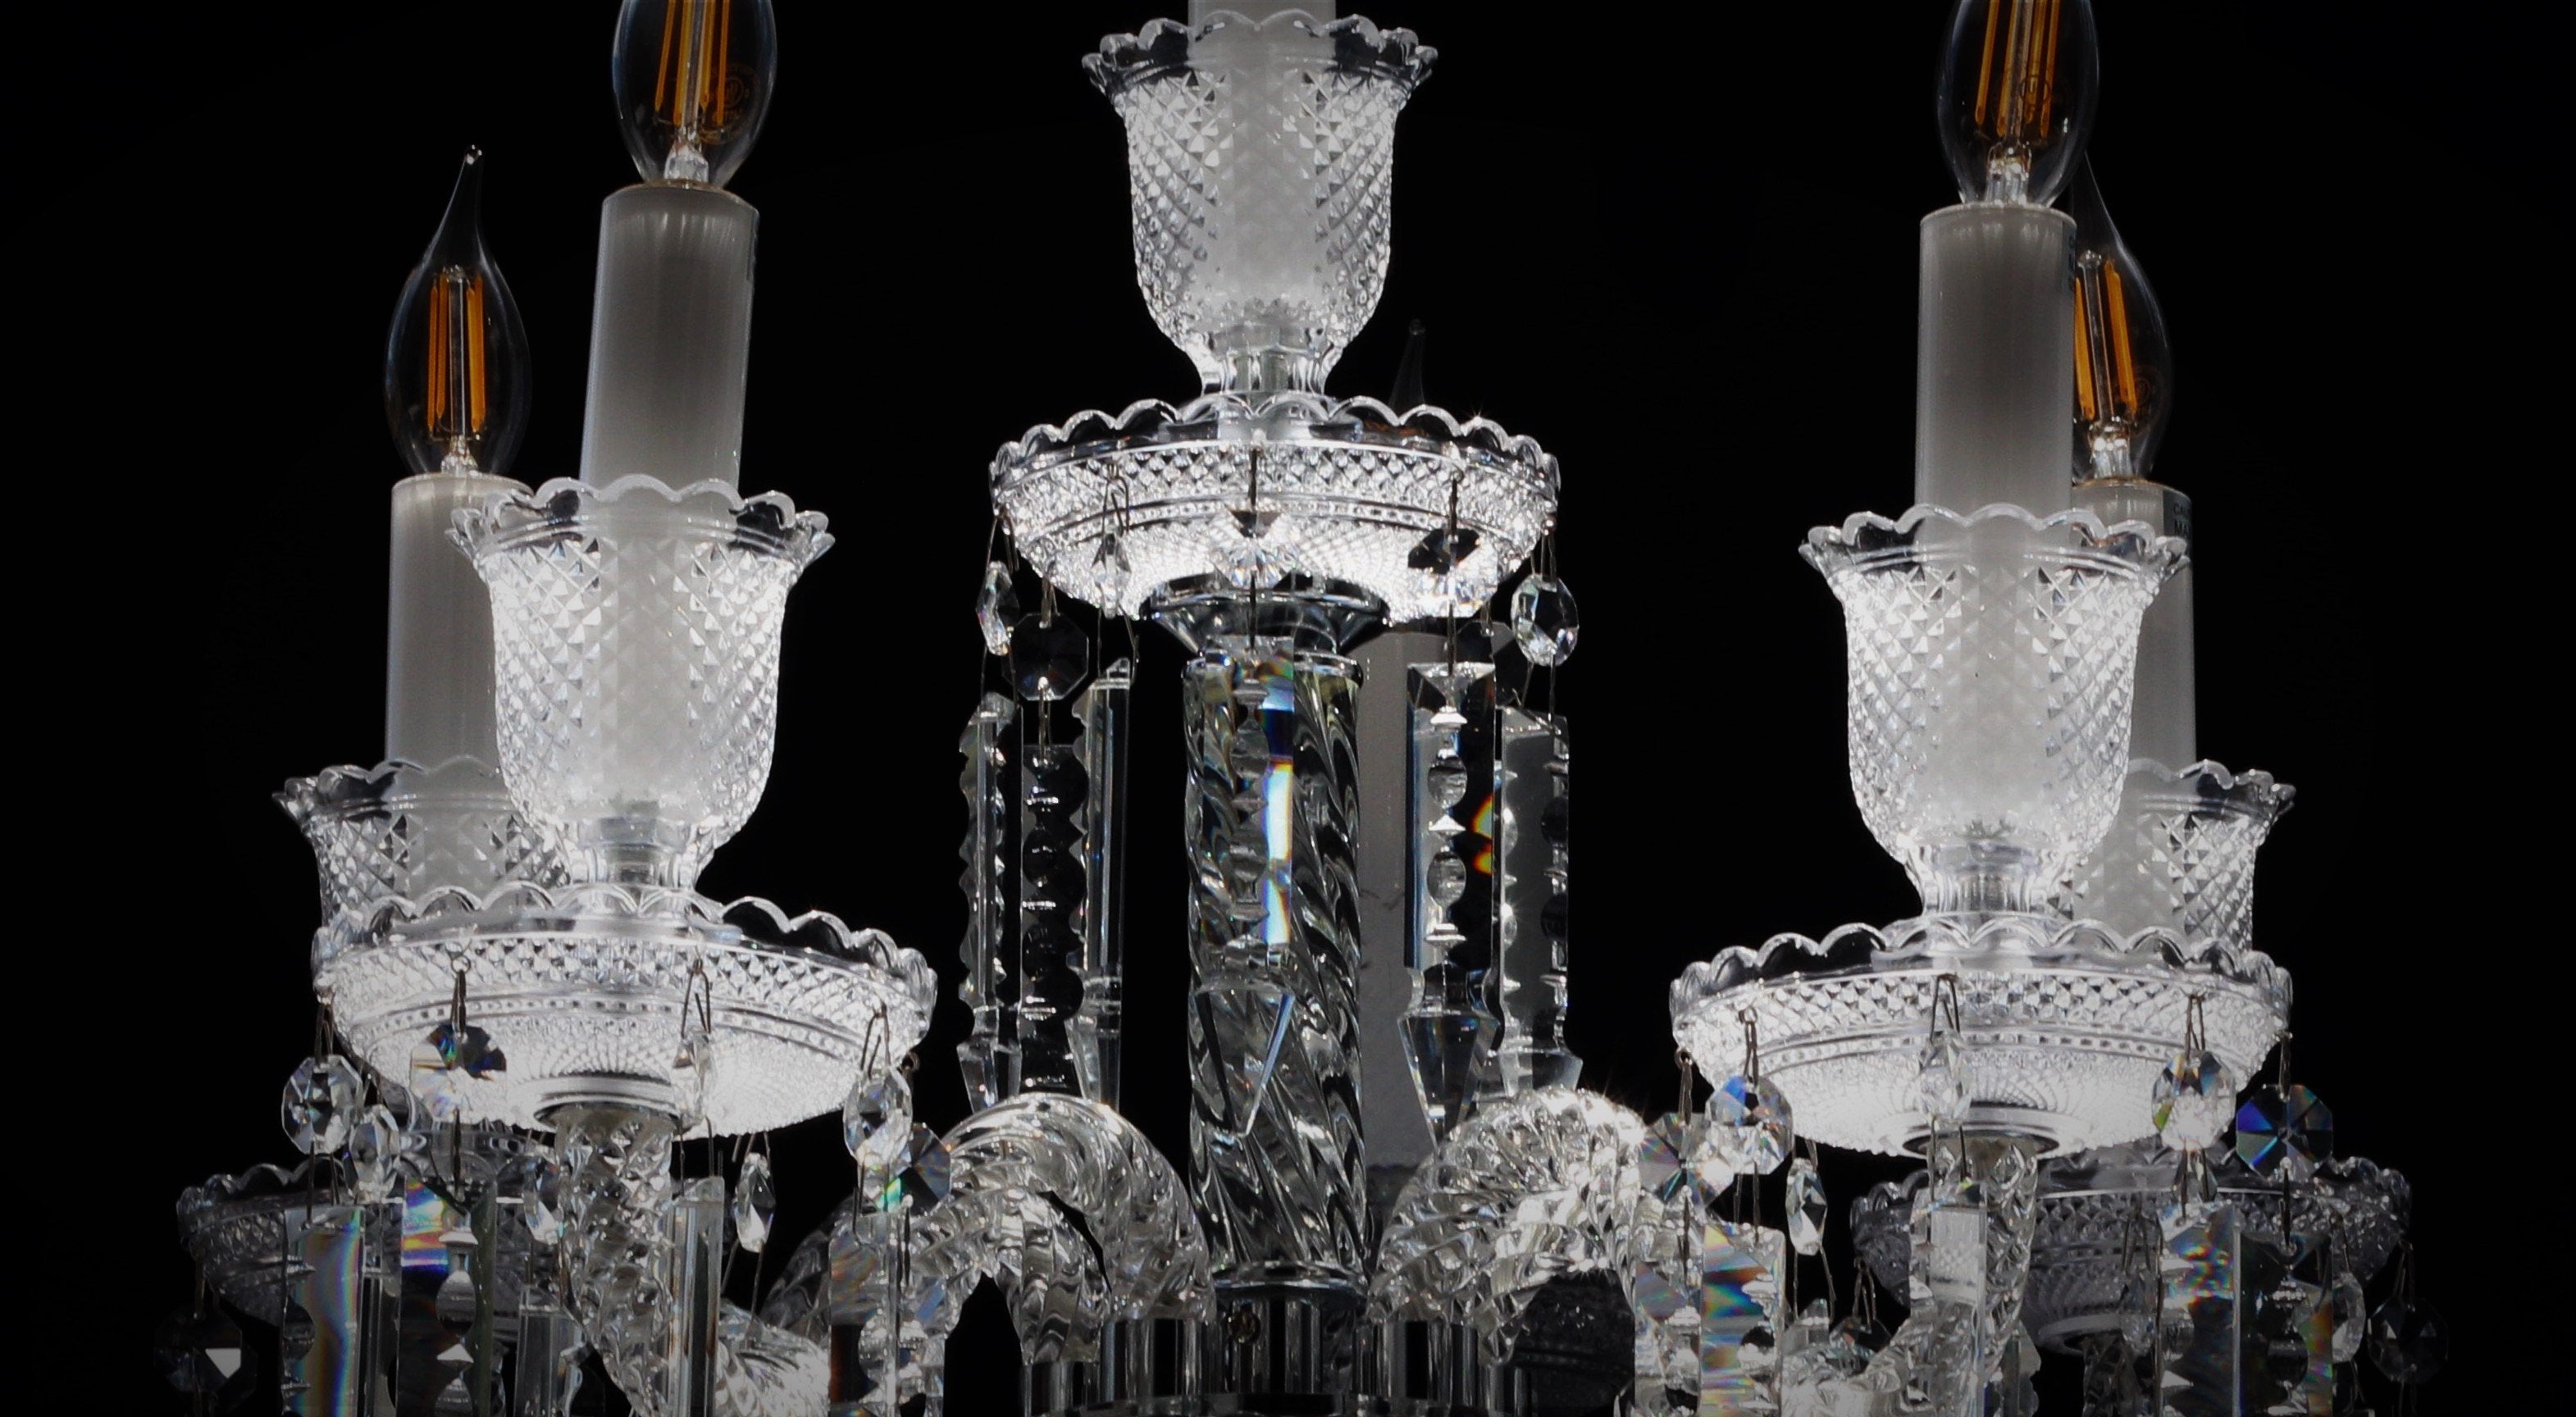 6L Zenith Crystal Table Lamp - Italian Concept - 